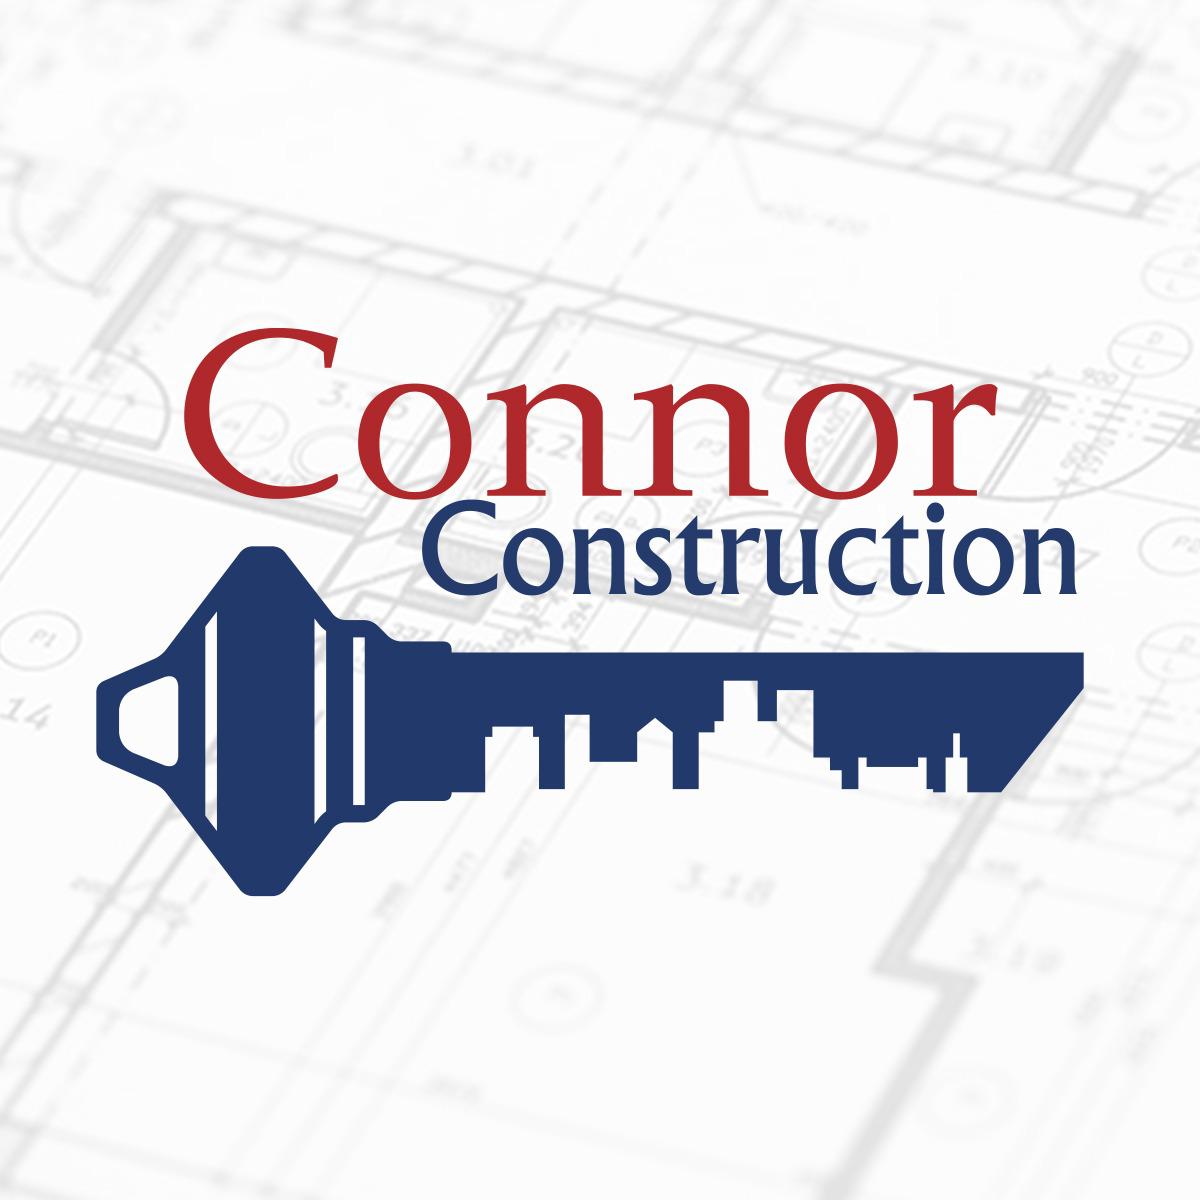 Connor Construction, LLC - Deptford, NJ 08096 - (856)599-1765 | ShowMeLocal.com